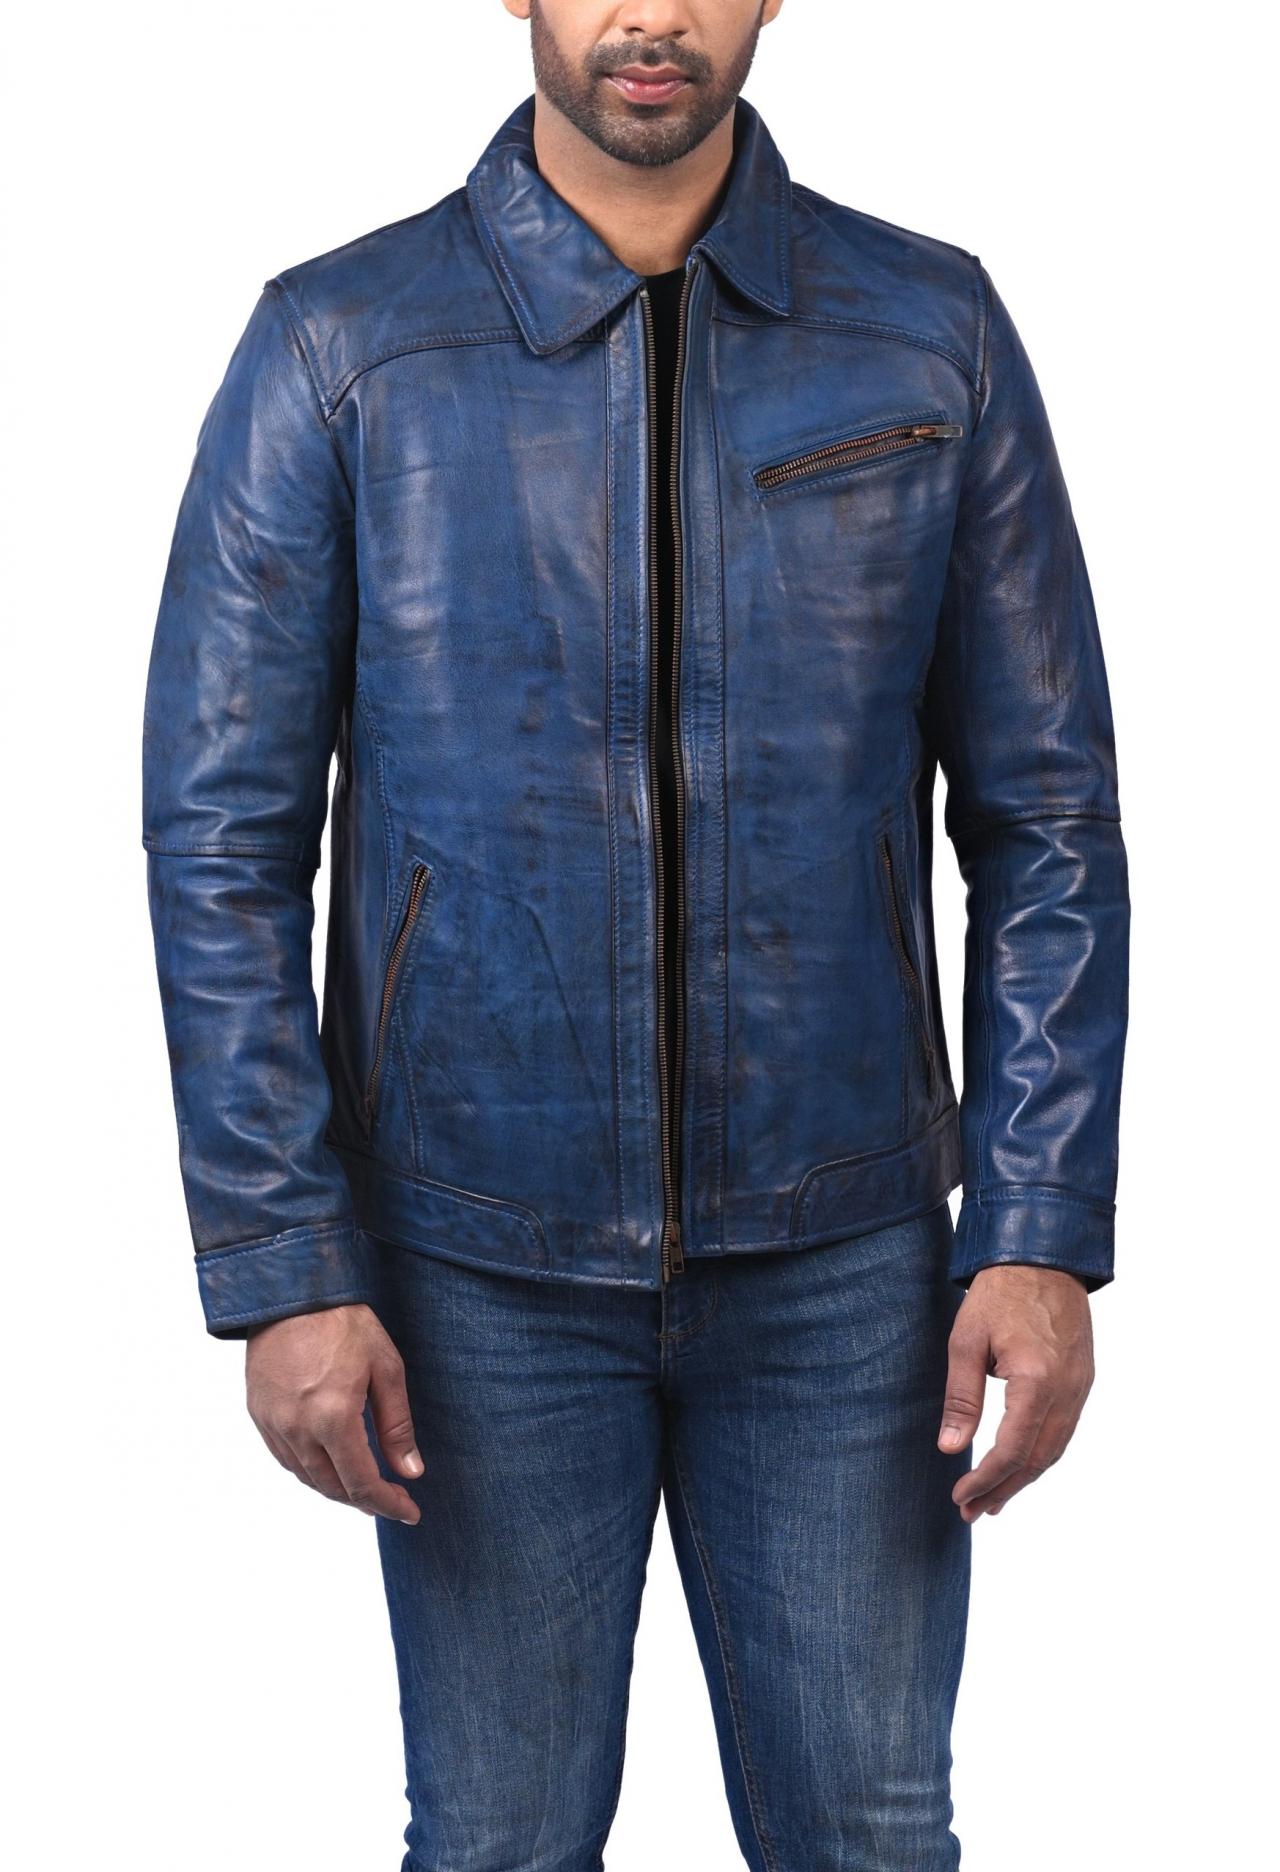 Men Party Wear Fashion Clothing Don Omar Biker Blue Motorcycle Leather Jacket